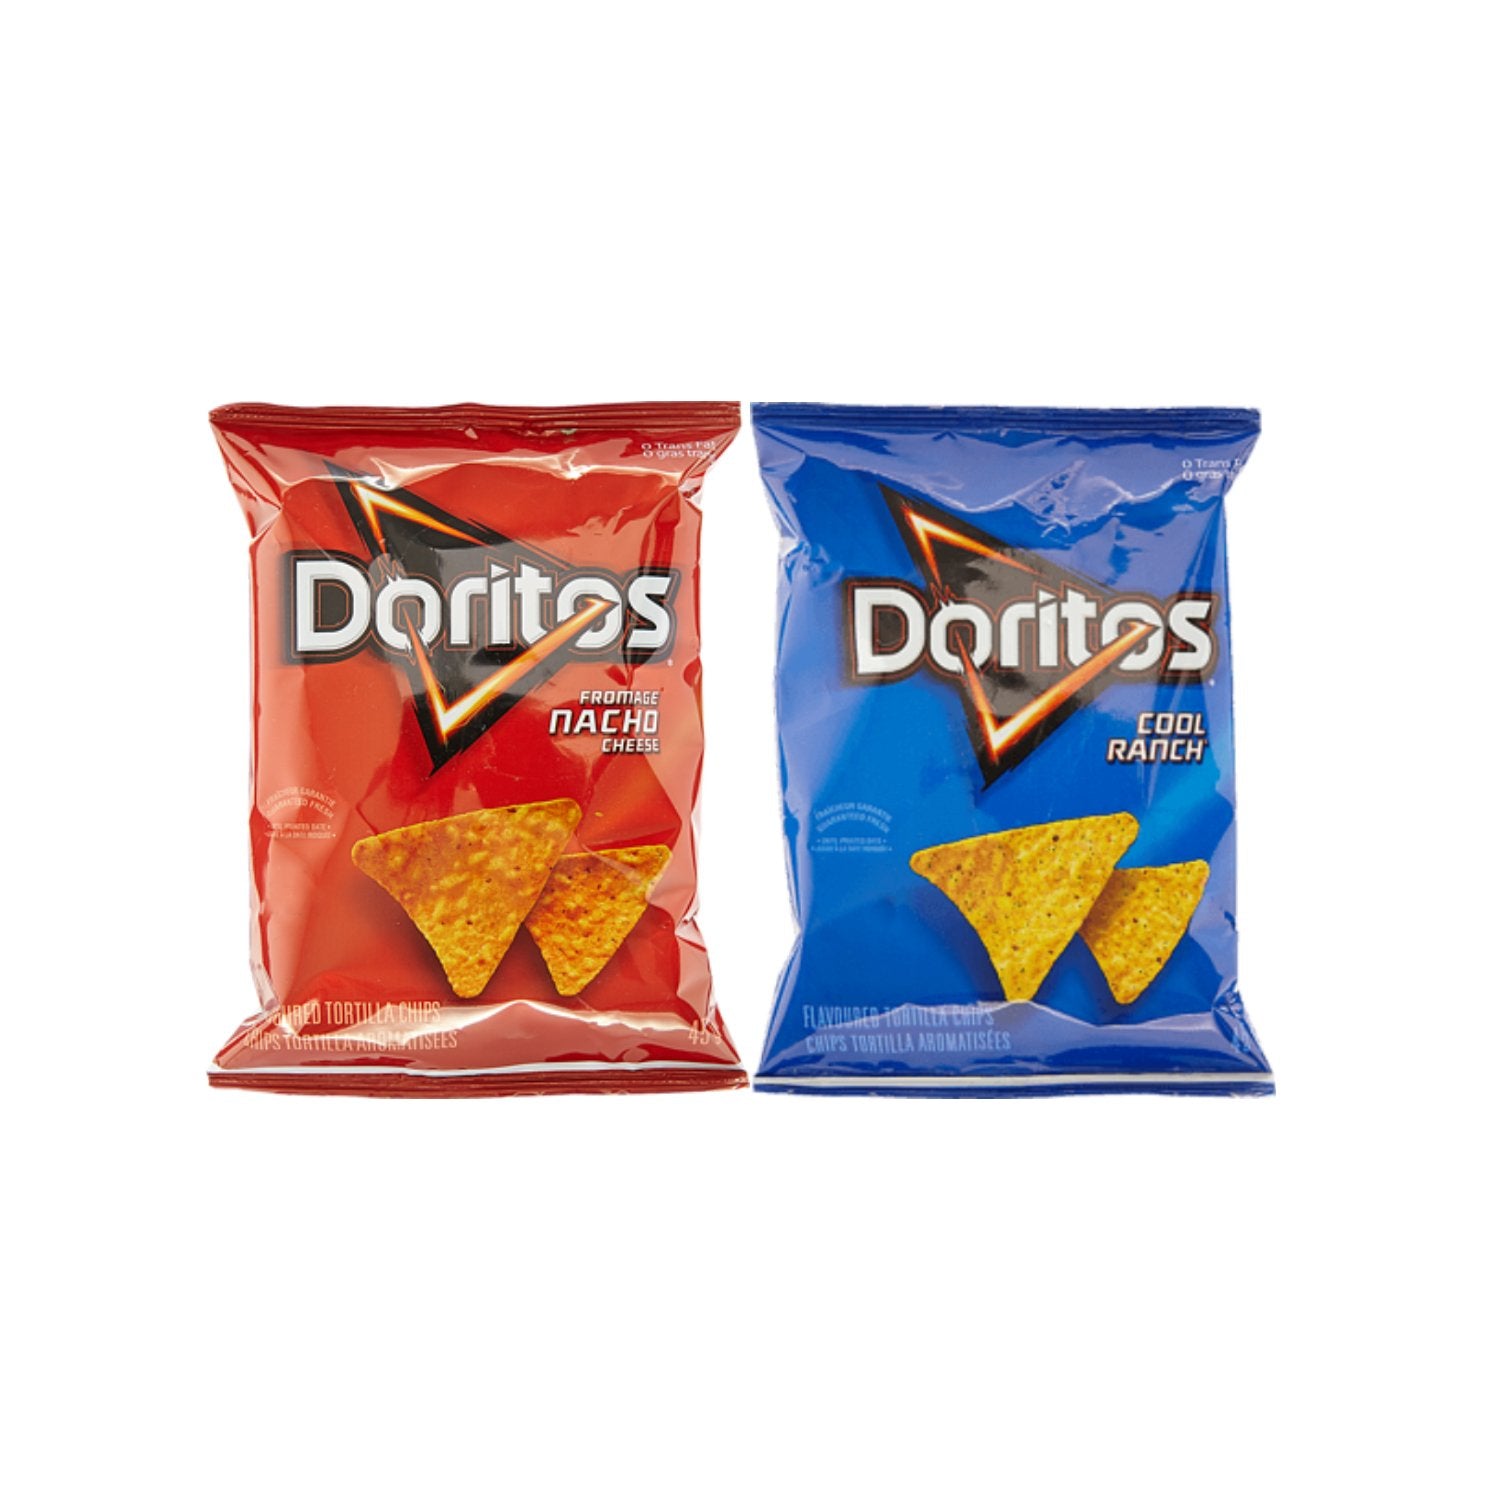 Doritos - Single Serve Size